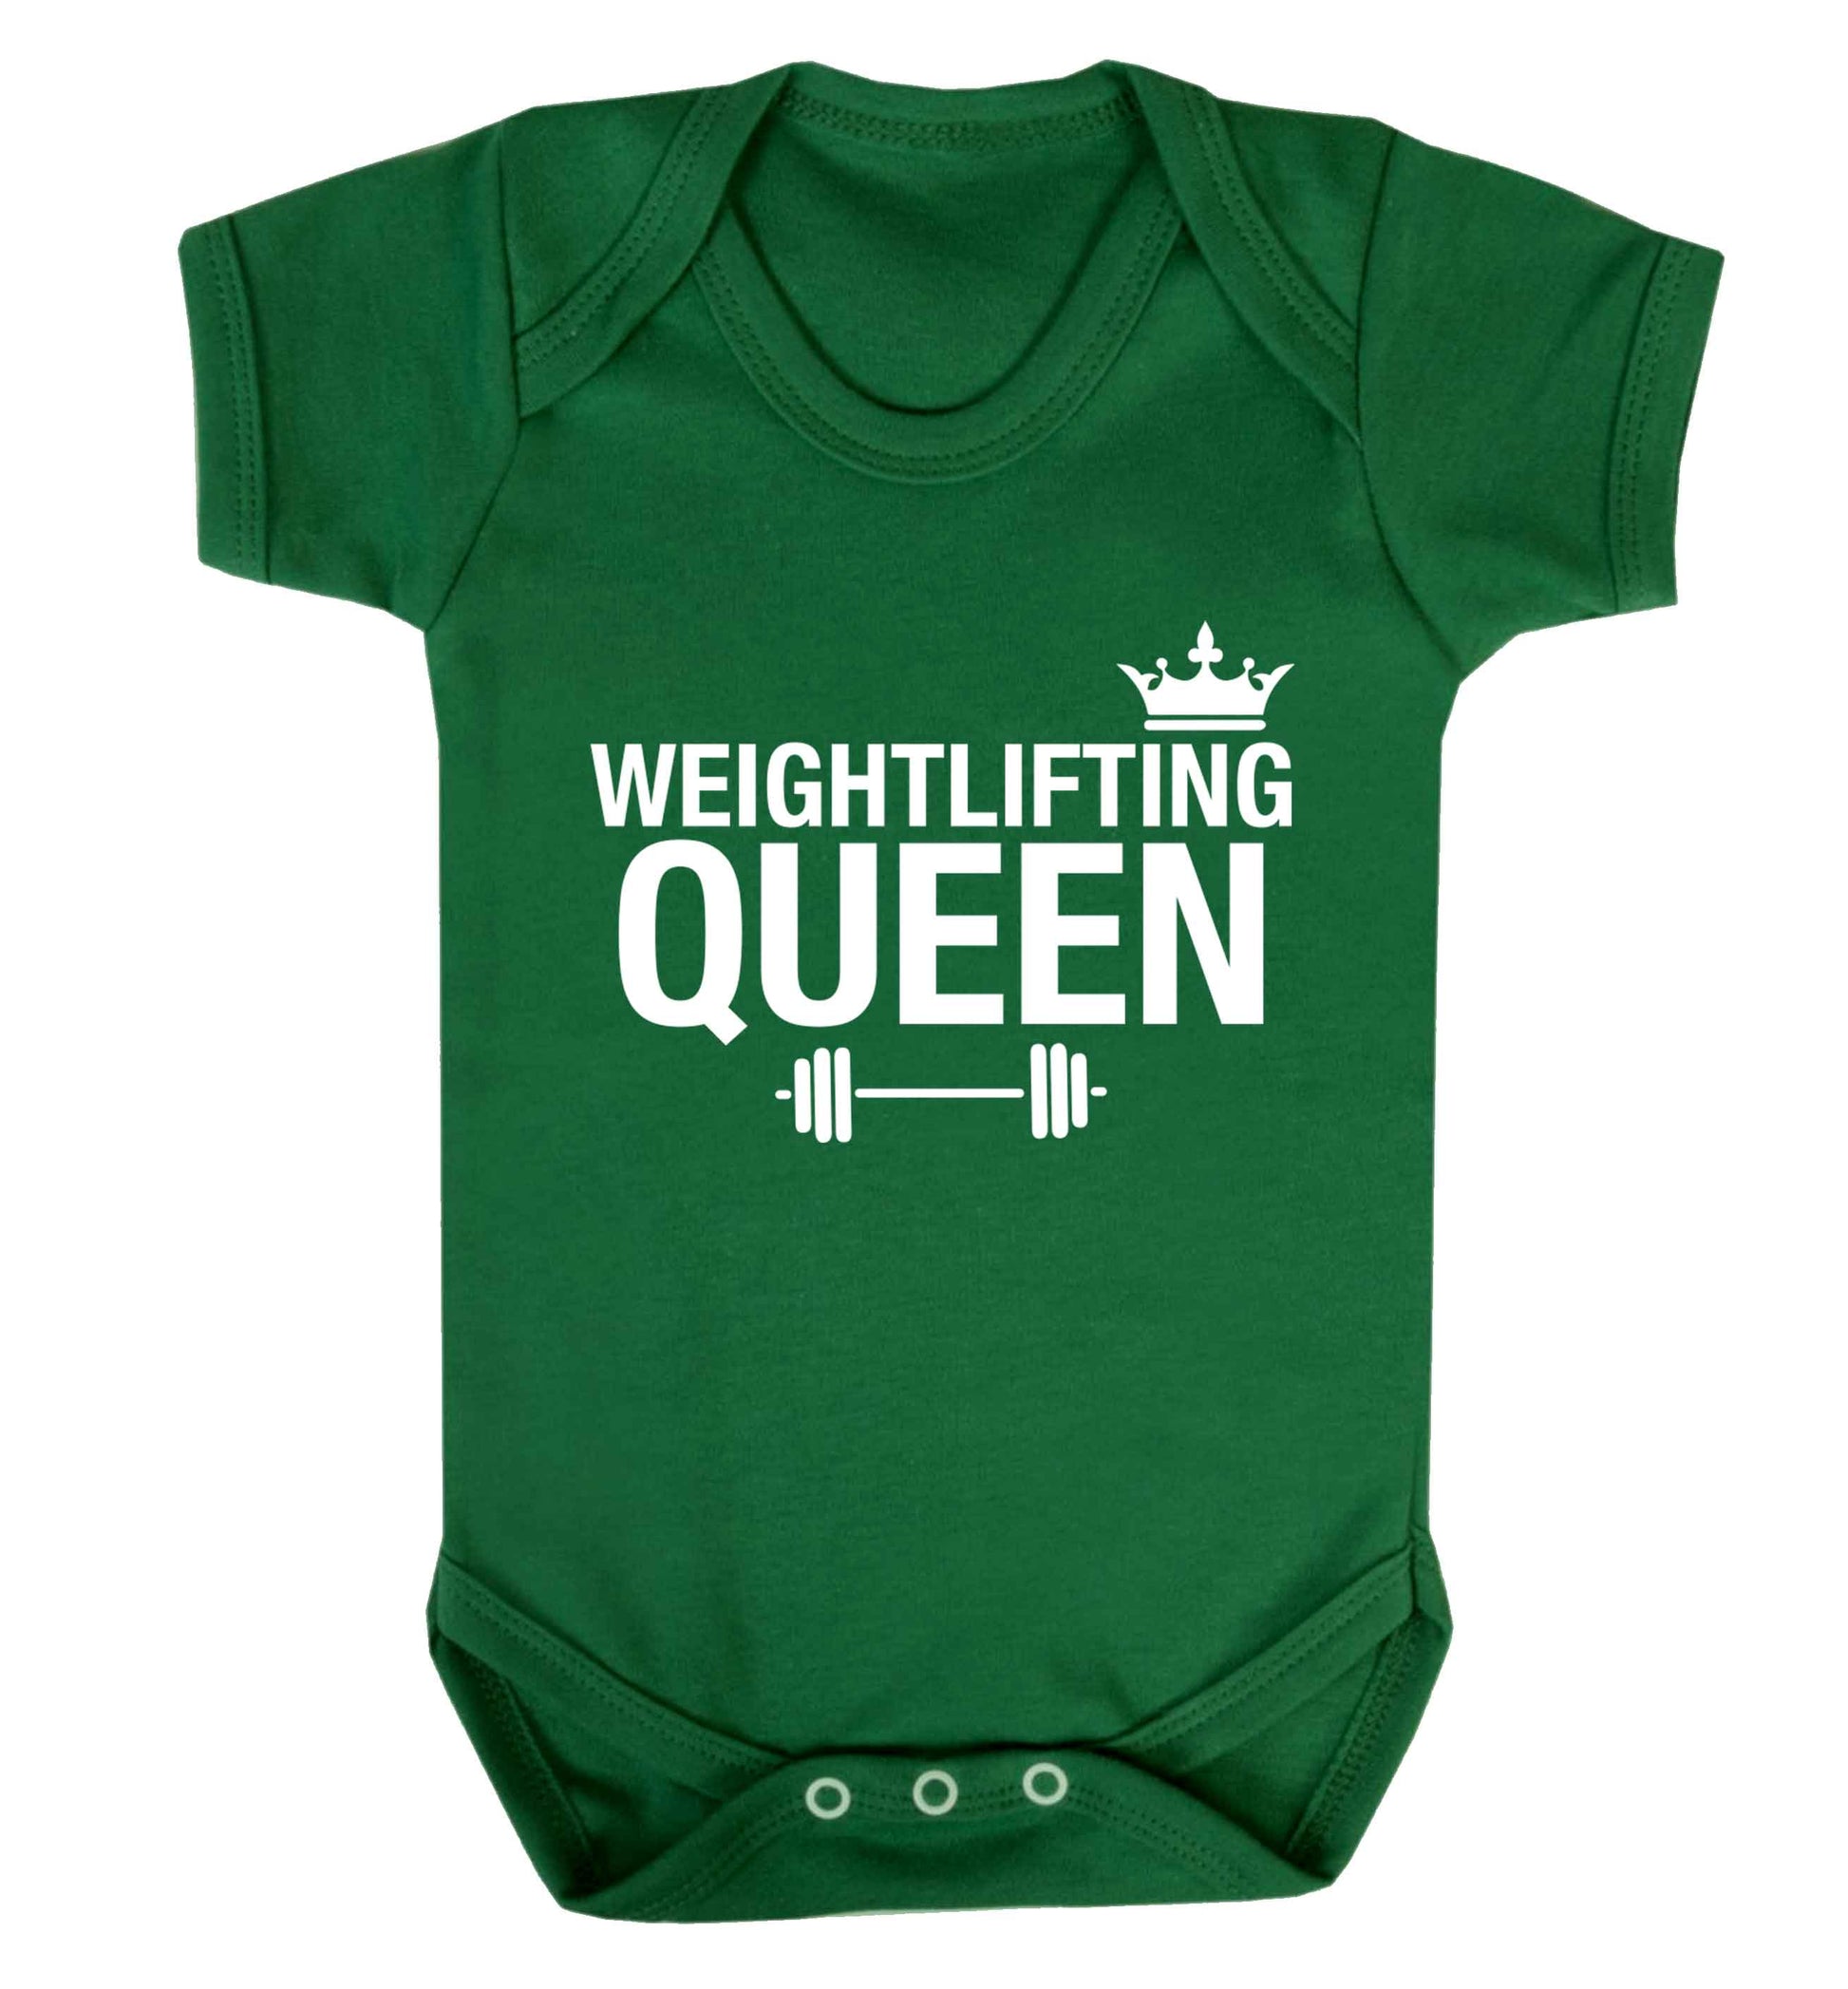 Weightlifting Queen Baby Vest green 18-24 months